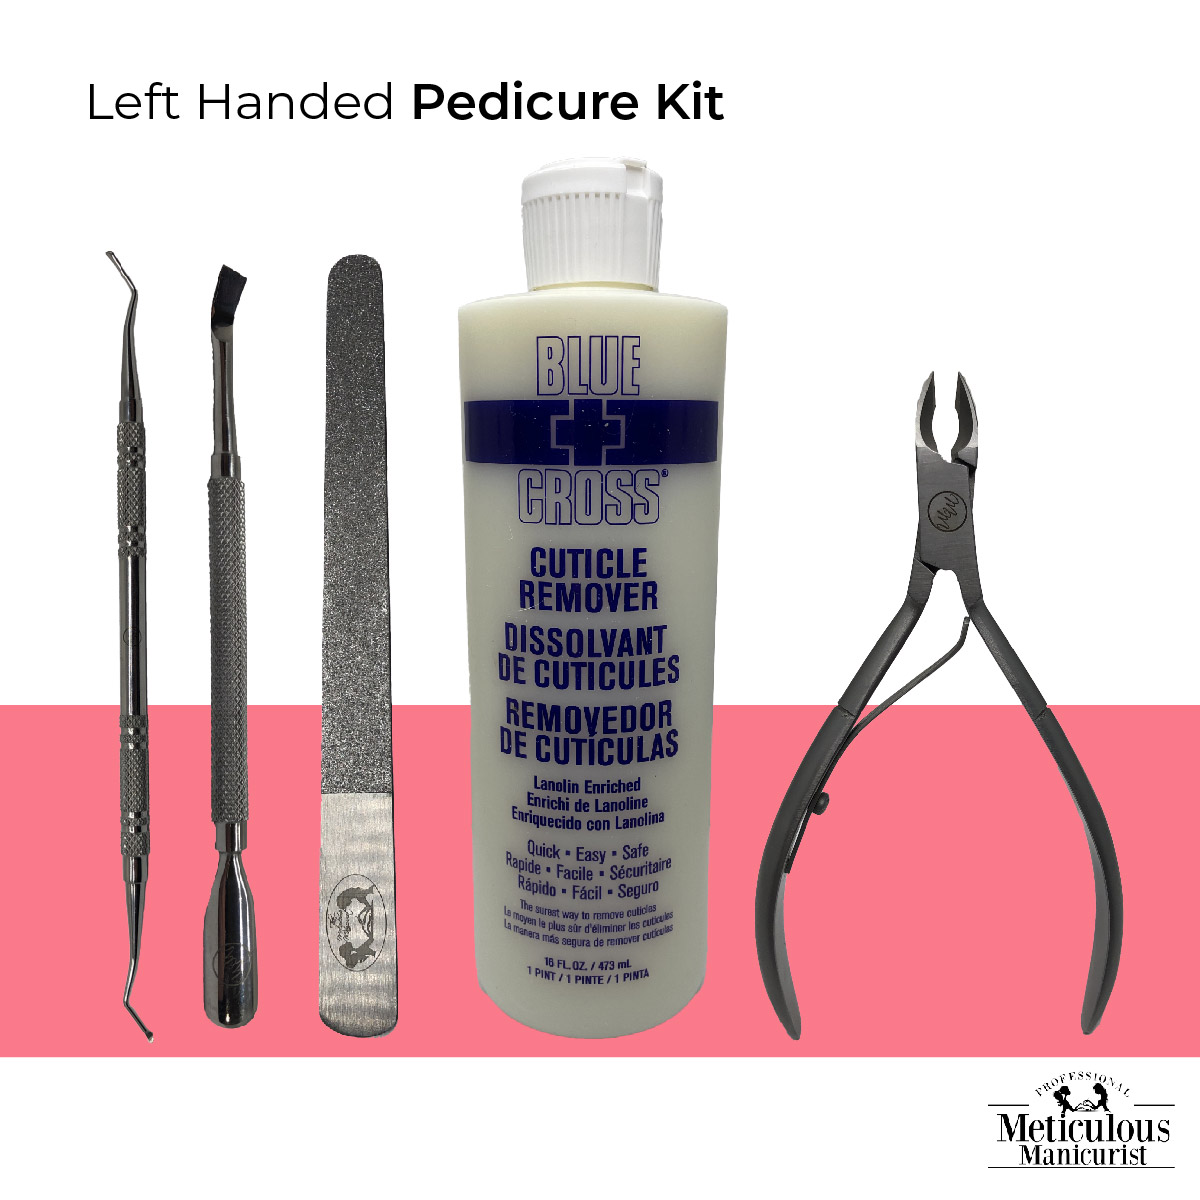 Left Handed Pedicure Kit